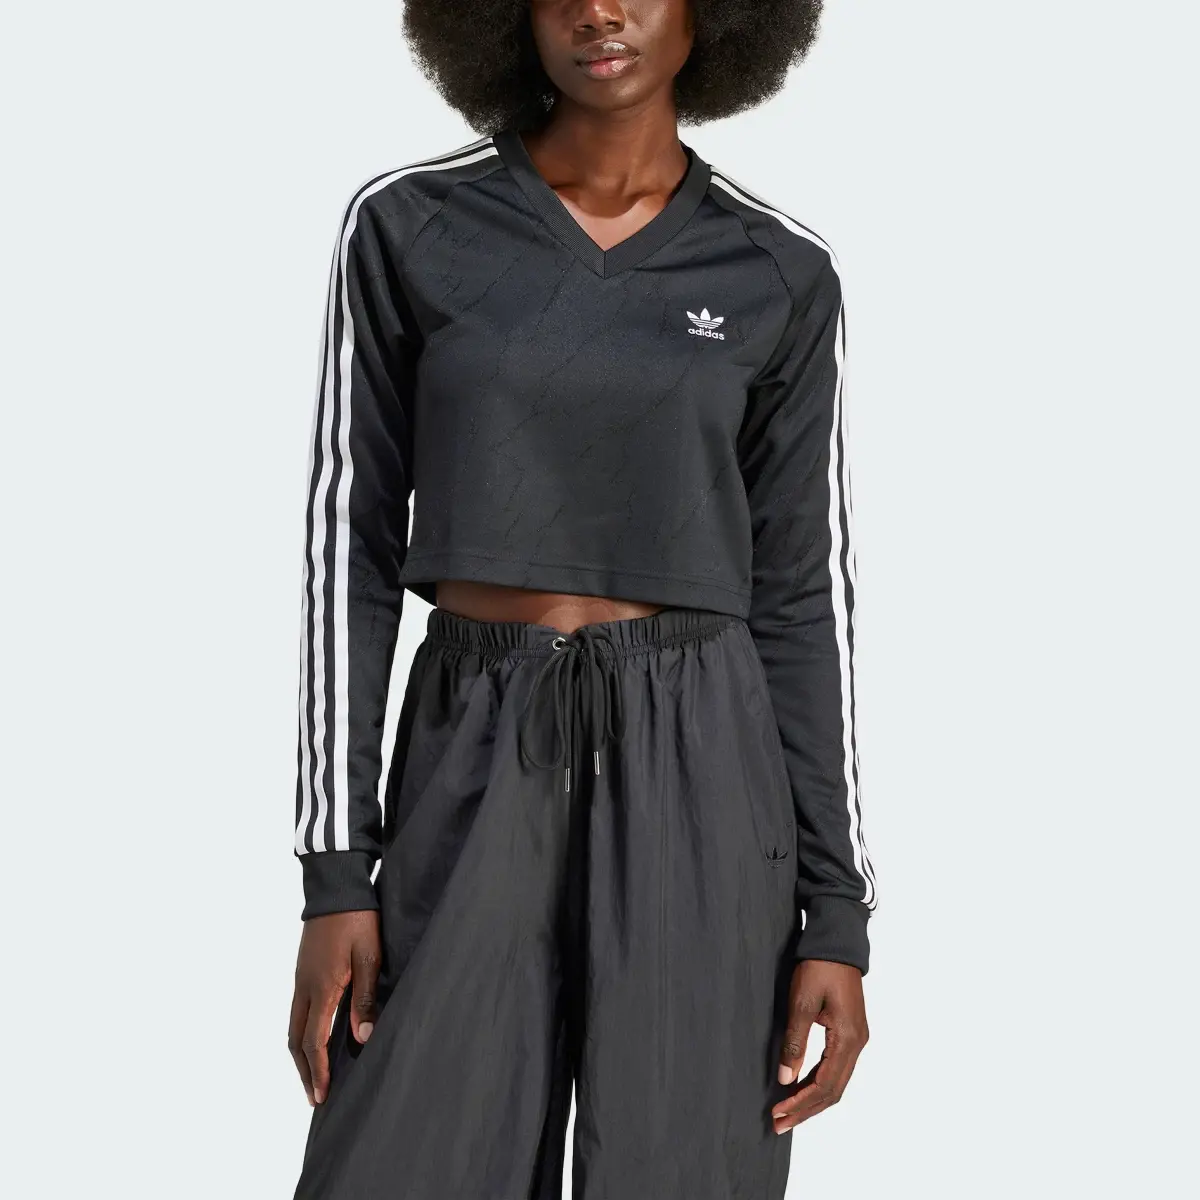 Adidas Long Sleeve Cropped Jersey. 1